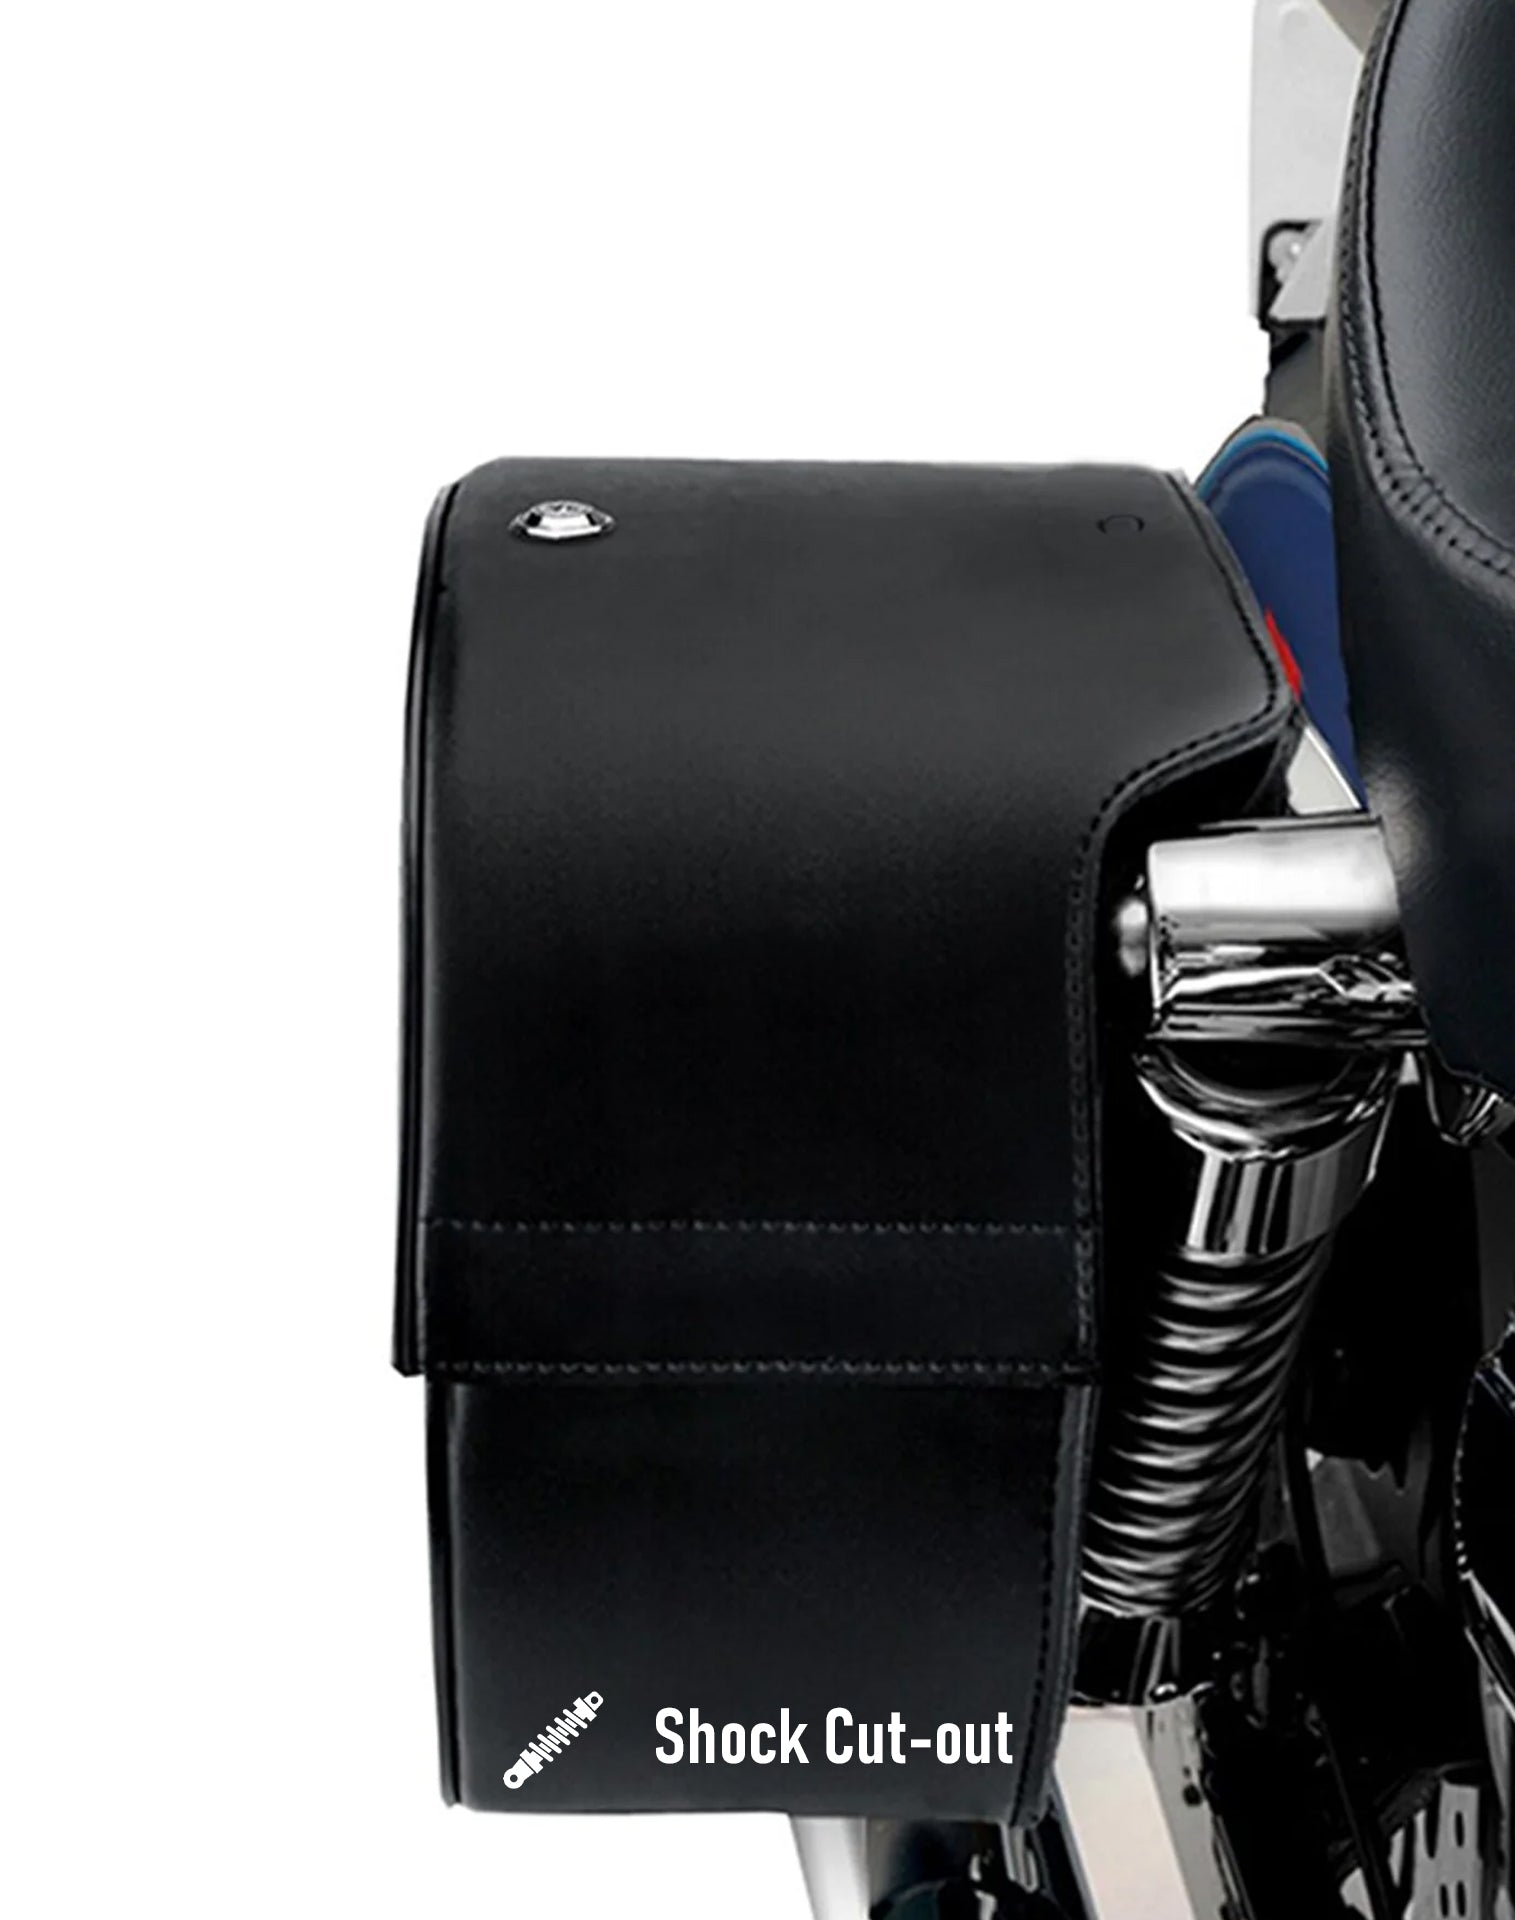 Viking Skarner Large Shock Cut Out Leather Motorcycle Saddlebags For Harley Street 500 Hard Shell Construction